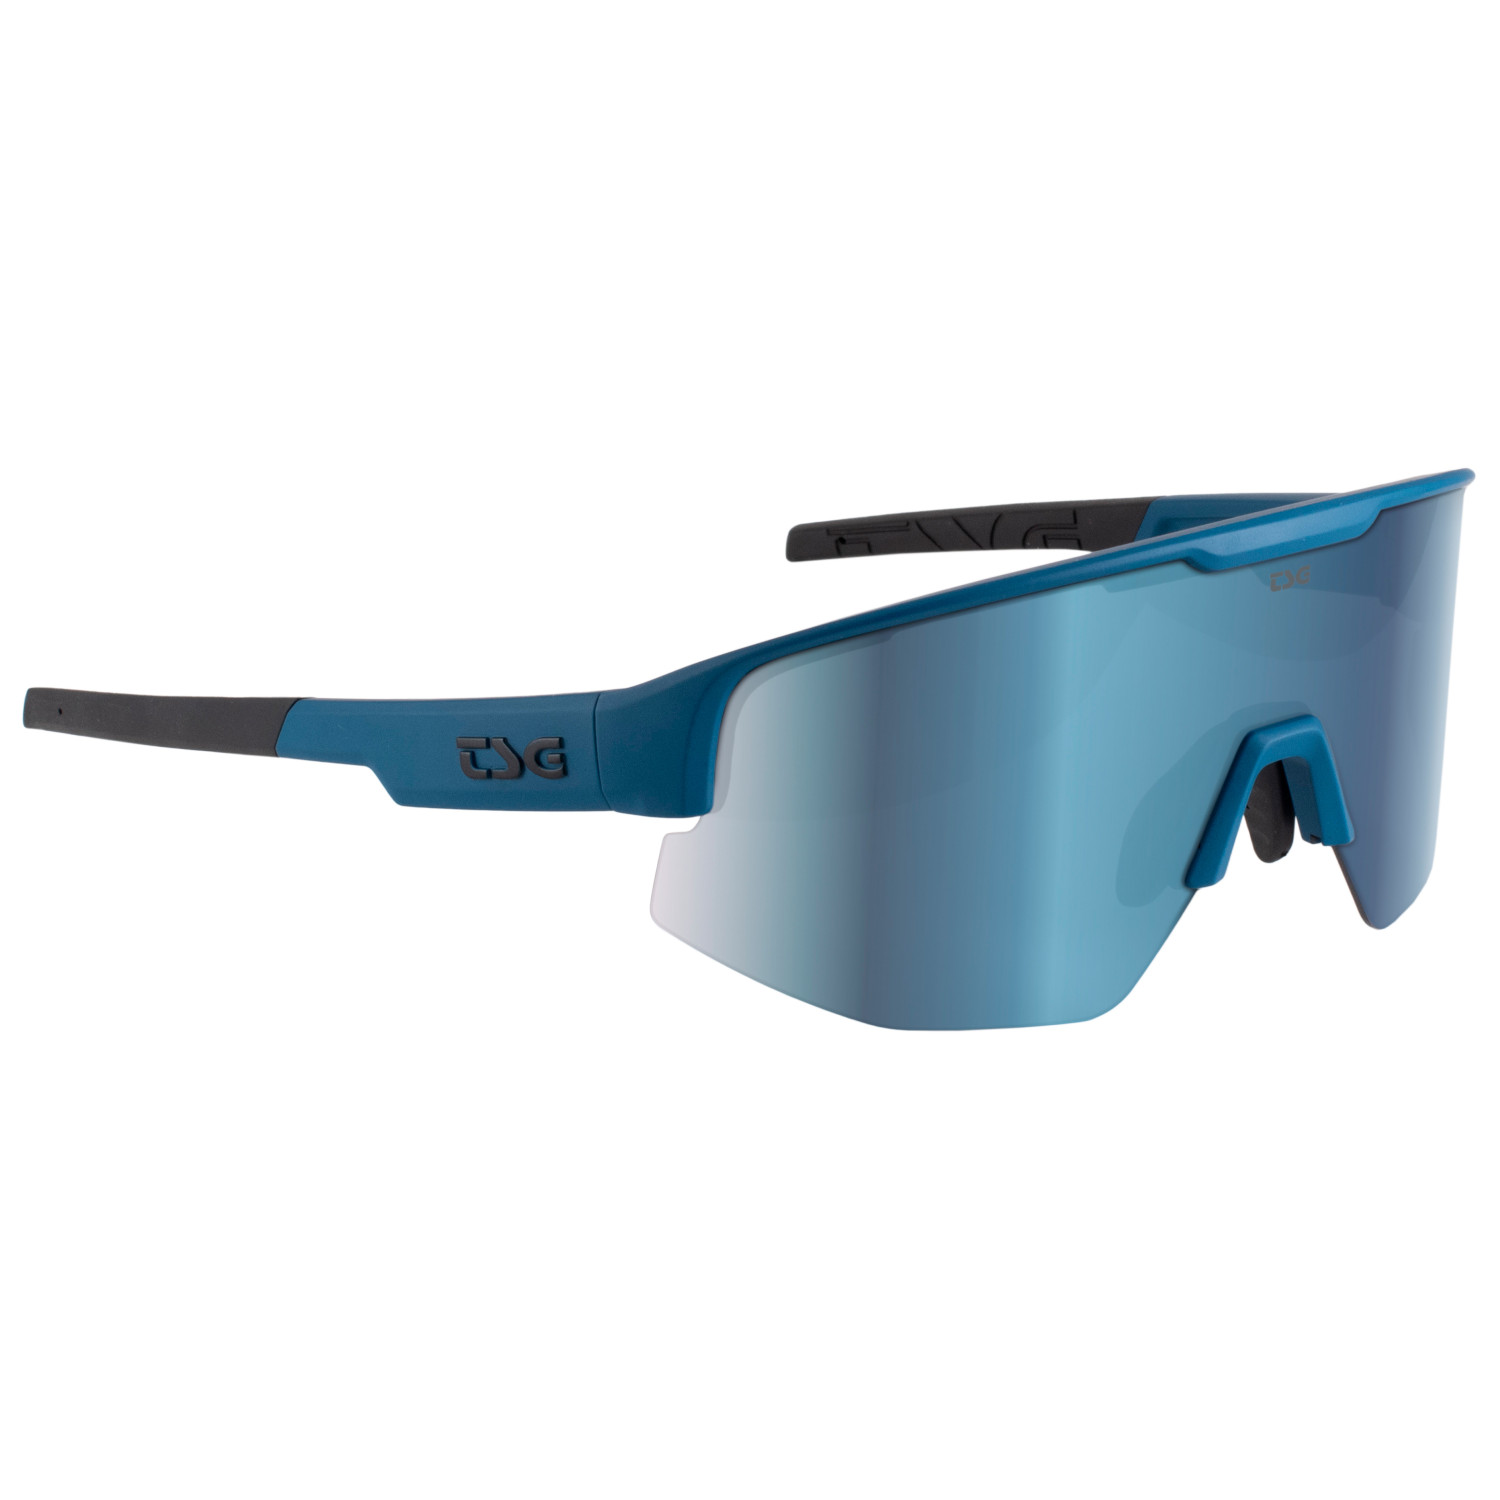 Велосипедные очки Tsg Loam Sunglasses, темно синий